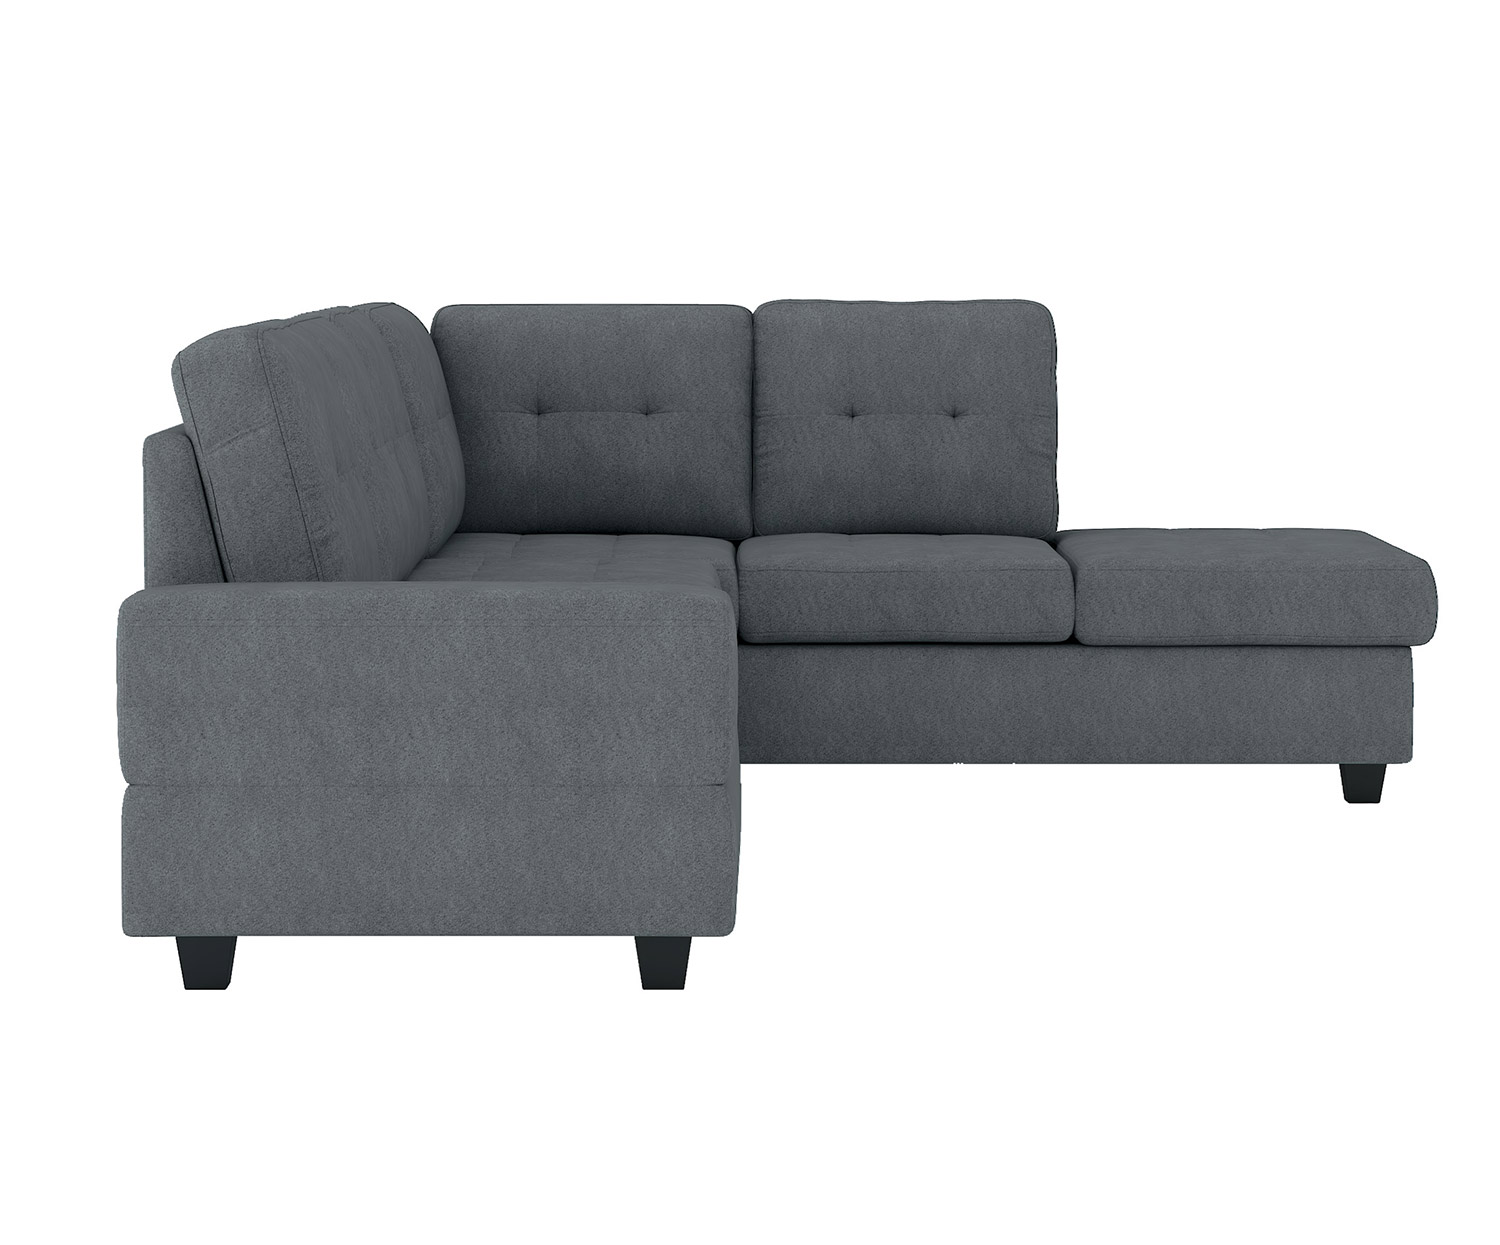 Homelegance Maston Sectional Sofa Set - Dark gray